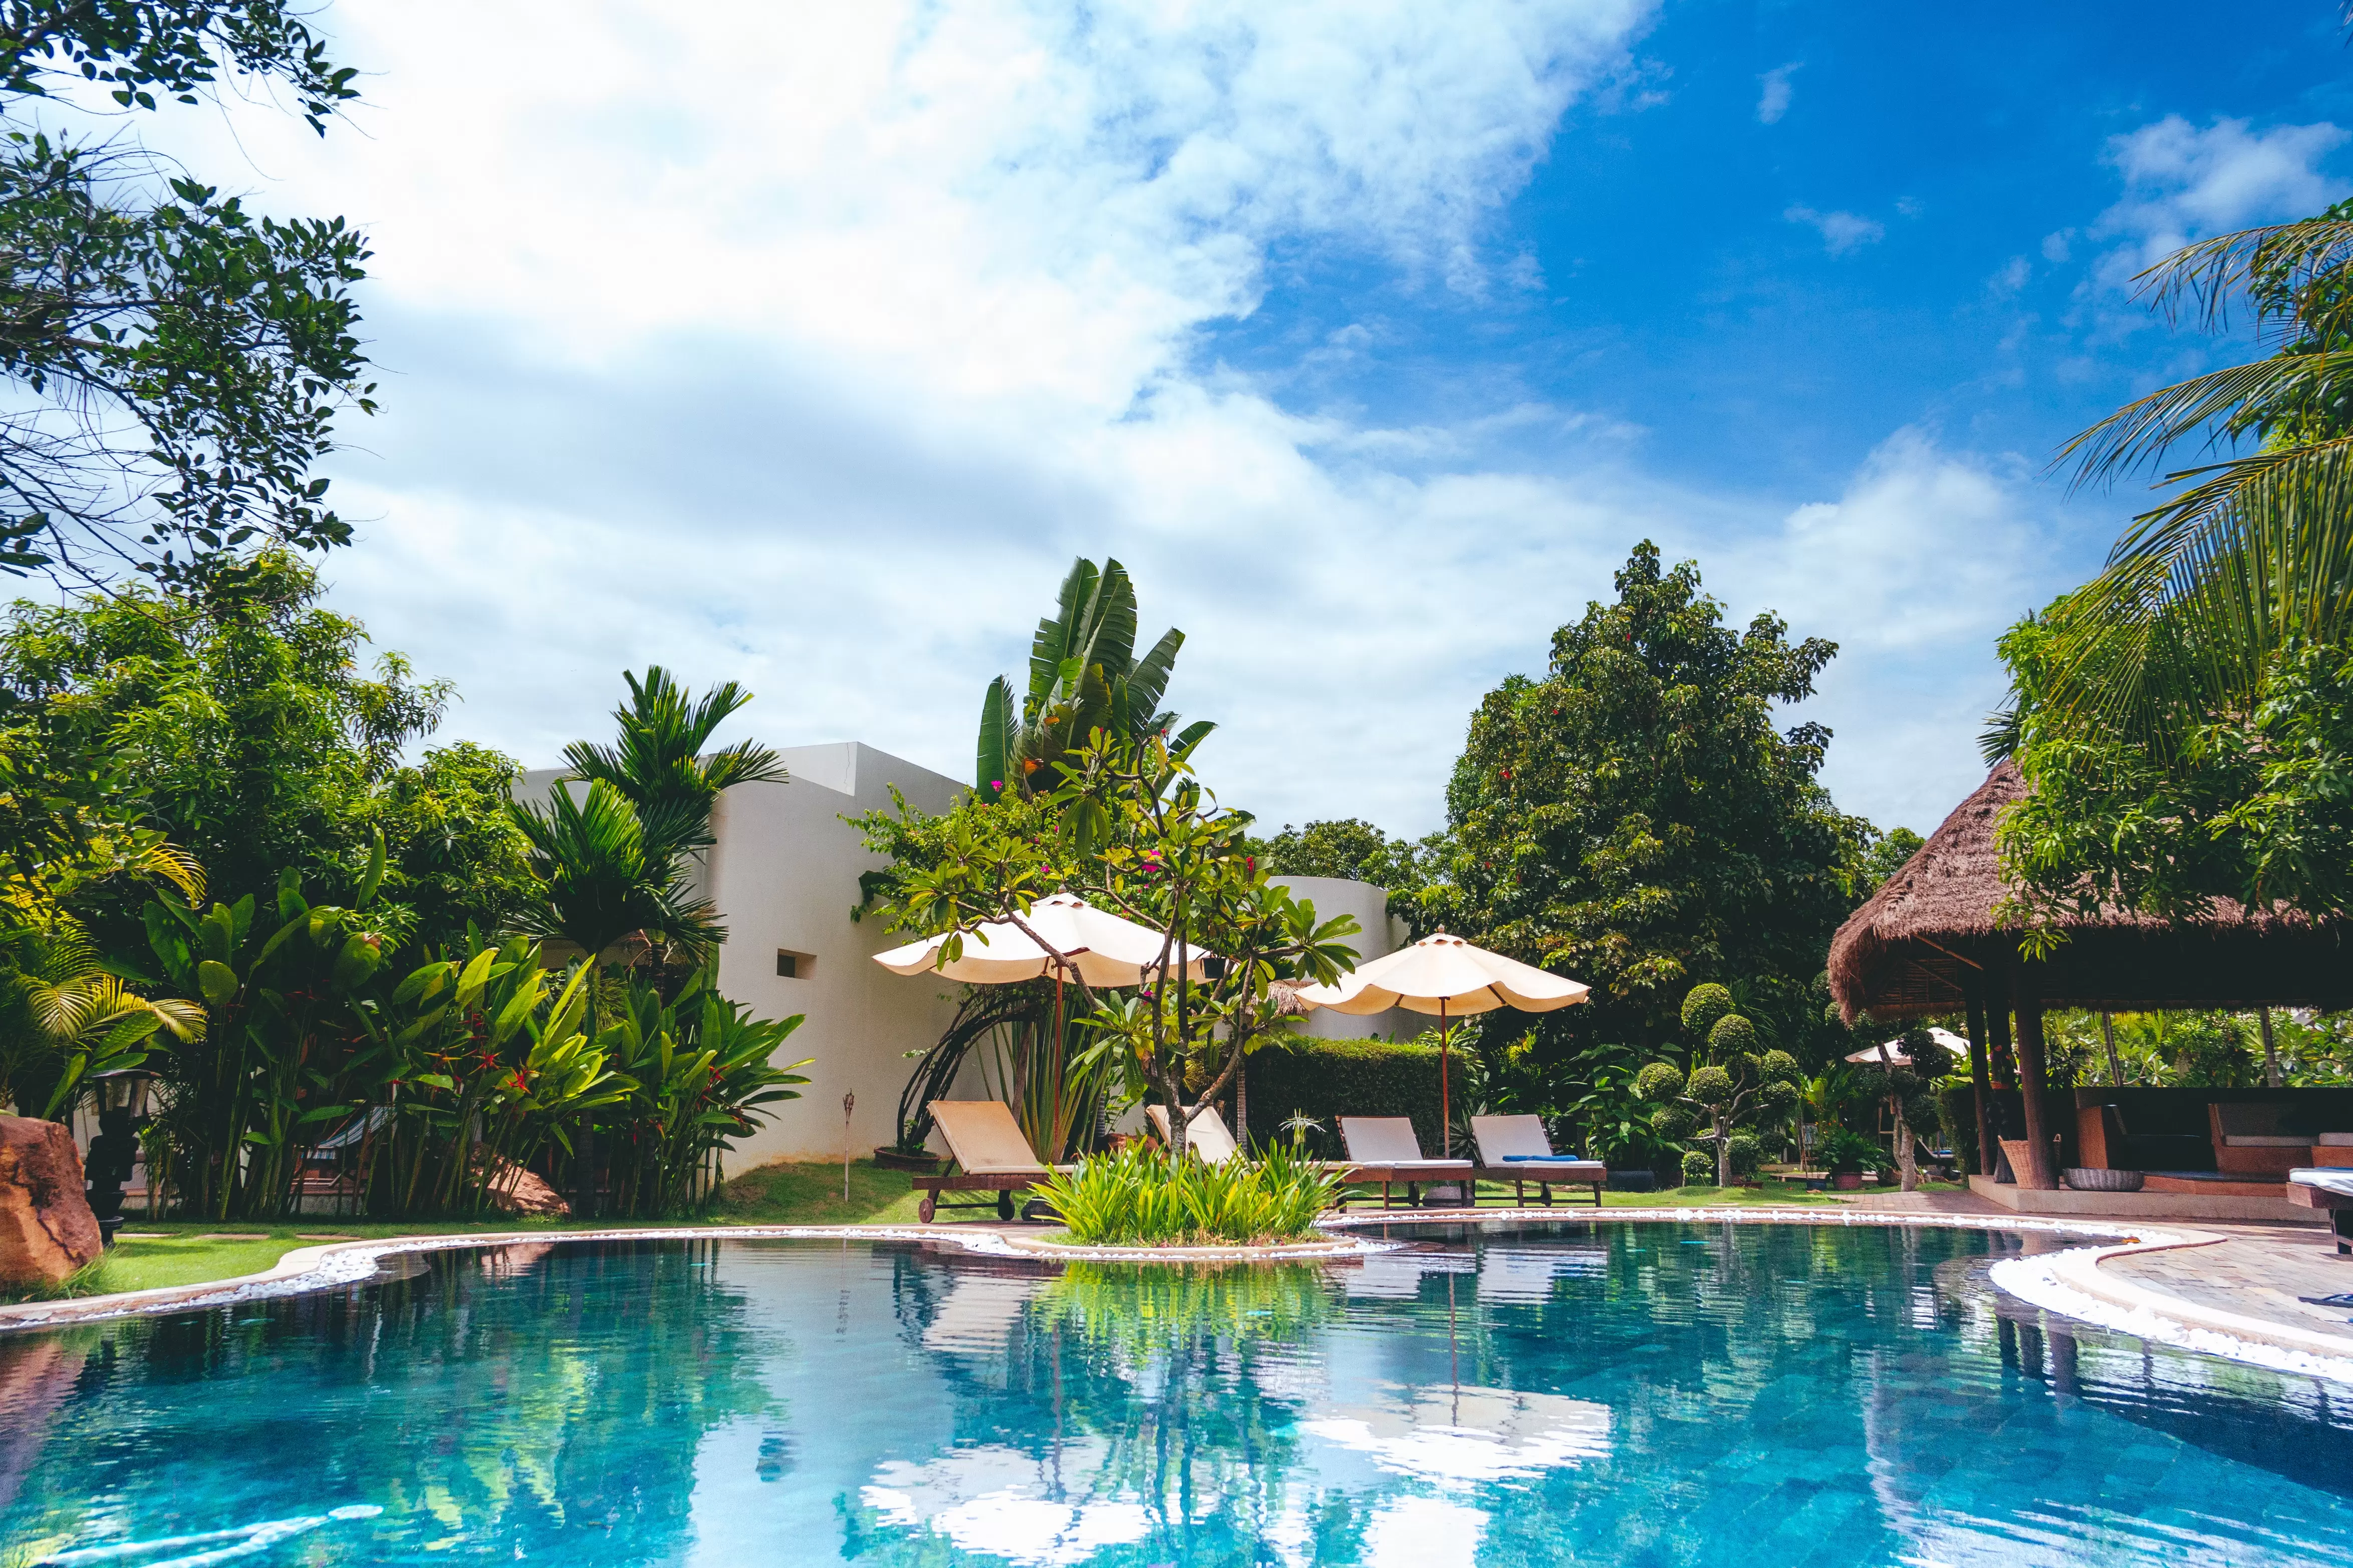 Swimming Pool Maintenance in Mauritius - WaterPleasures Mauritius